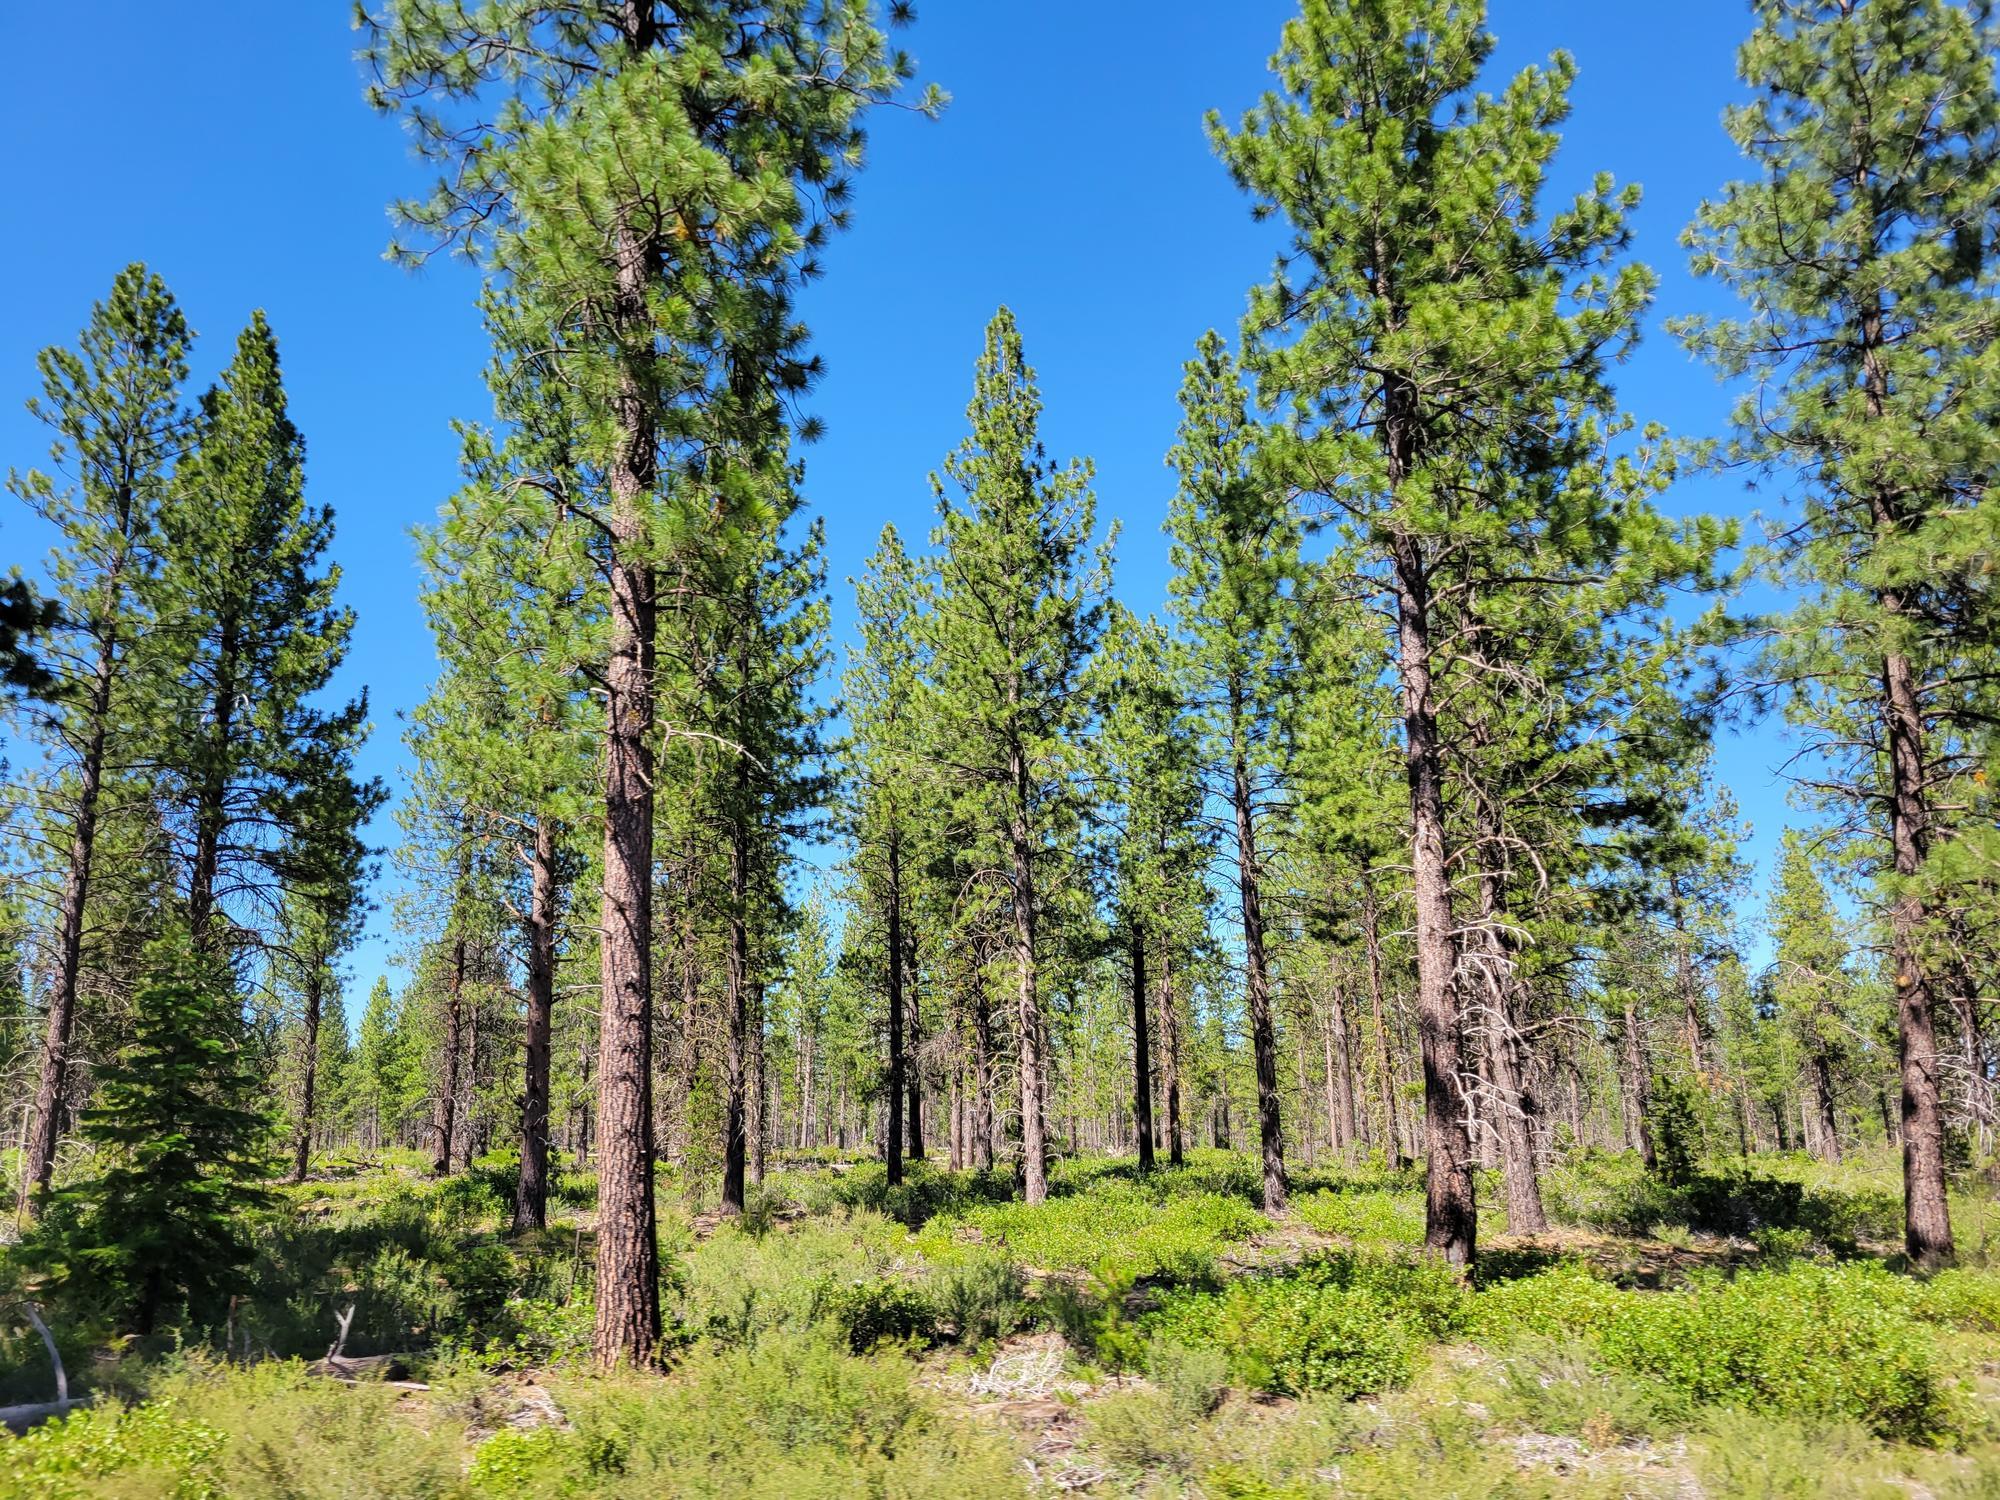 ponderosa pine spread out